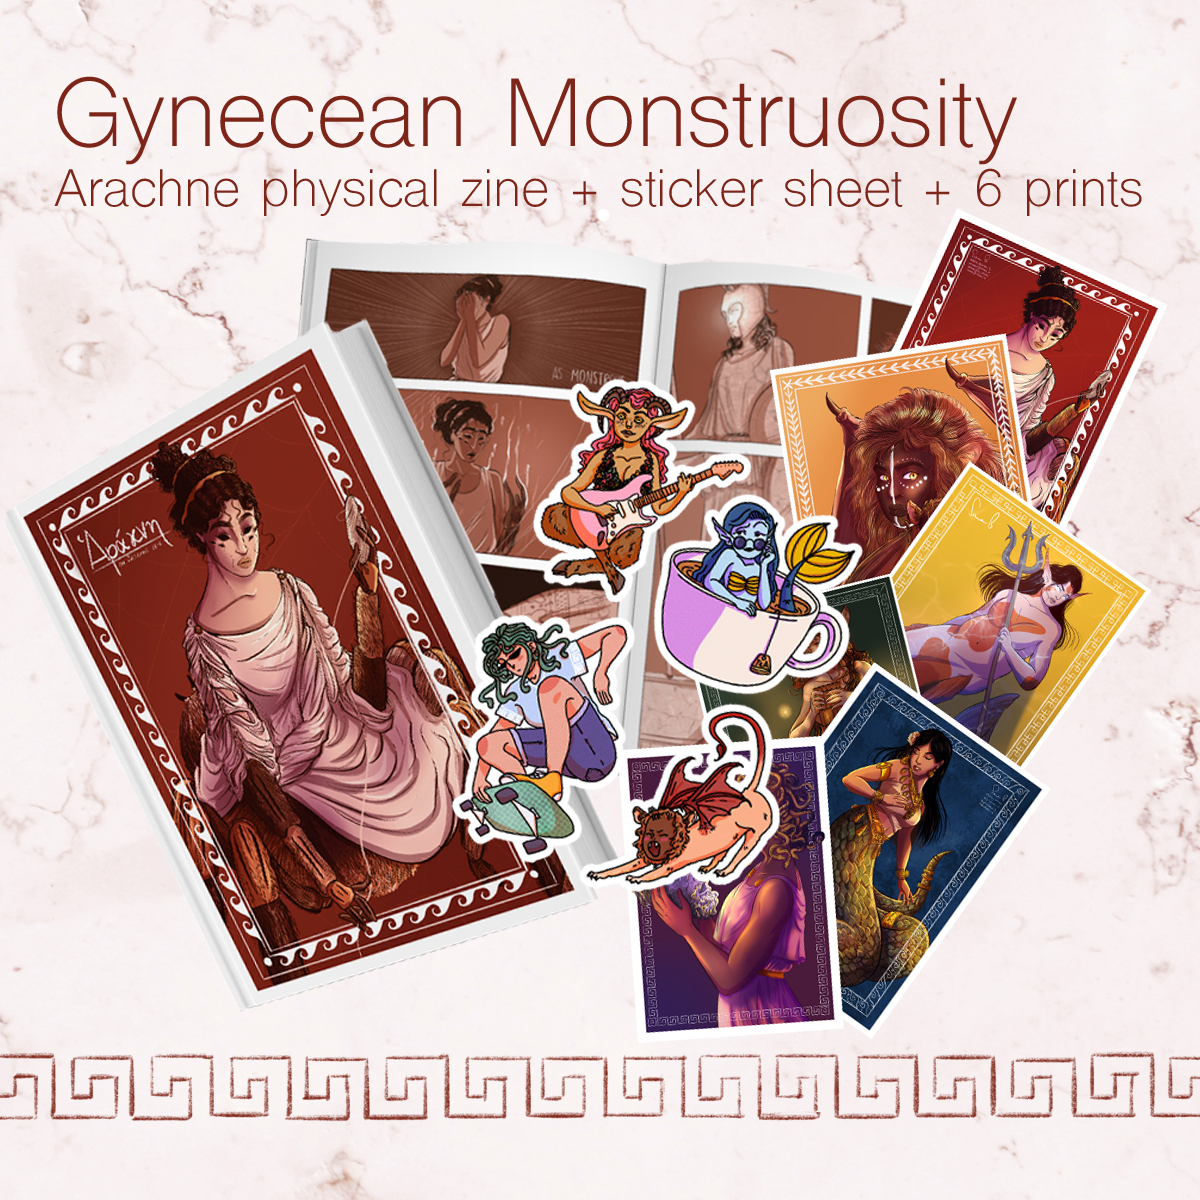 Gynecean Monstruosity: an ode to womanly monsterhoodlinks— shop:  https://forms.gle/1YLenaUnv3ptmDkU7— about:  https://gyneceanmonstruosity.carrd.co — faq:  https://gyneceanmonstruosity.tumblr.com/faq — tumblr:  https://gyneceanmonstruosity.tumblr.com/ ____ #mythology  #greek  #zine  #comic  #illustration  #digital  #art  #sticker  #print